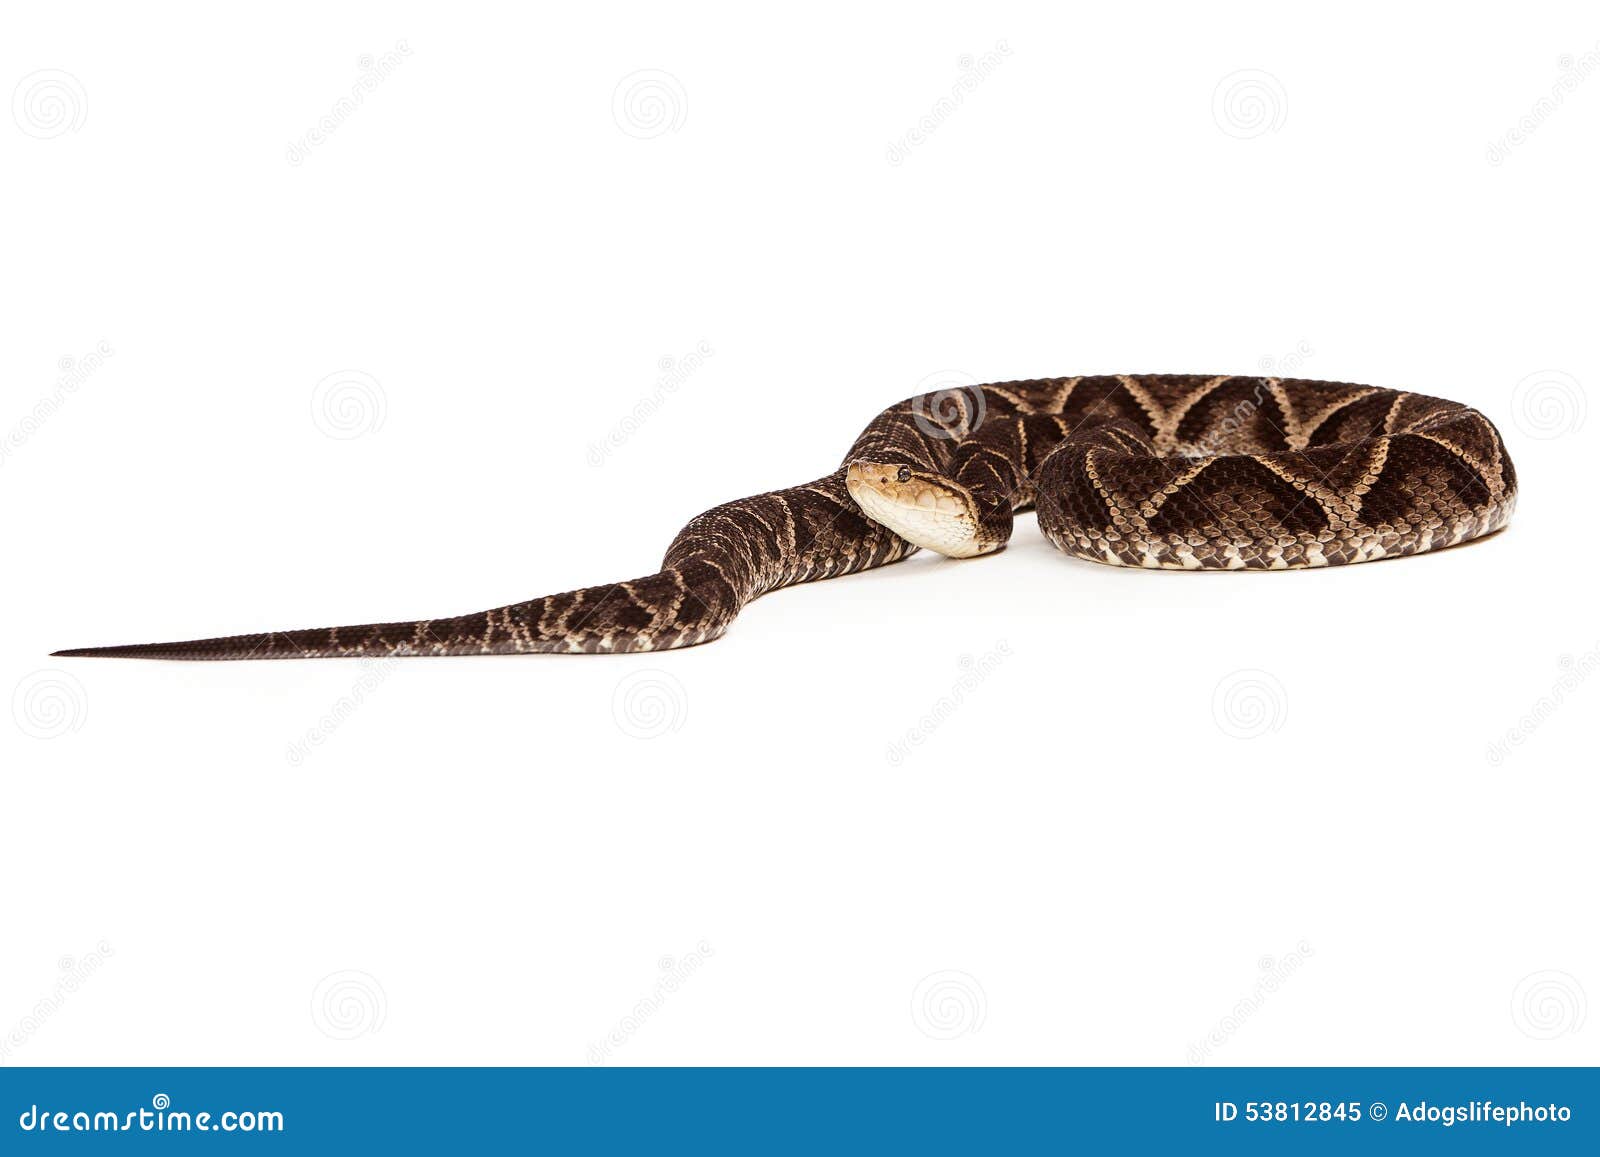 venomous terciopelo pit viper snake